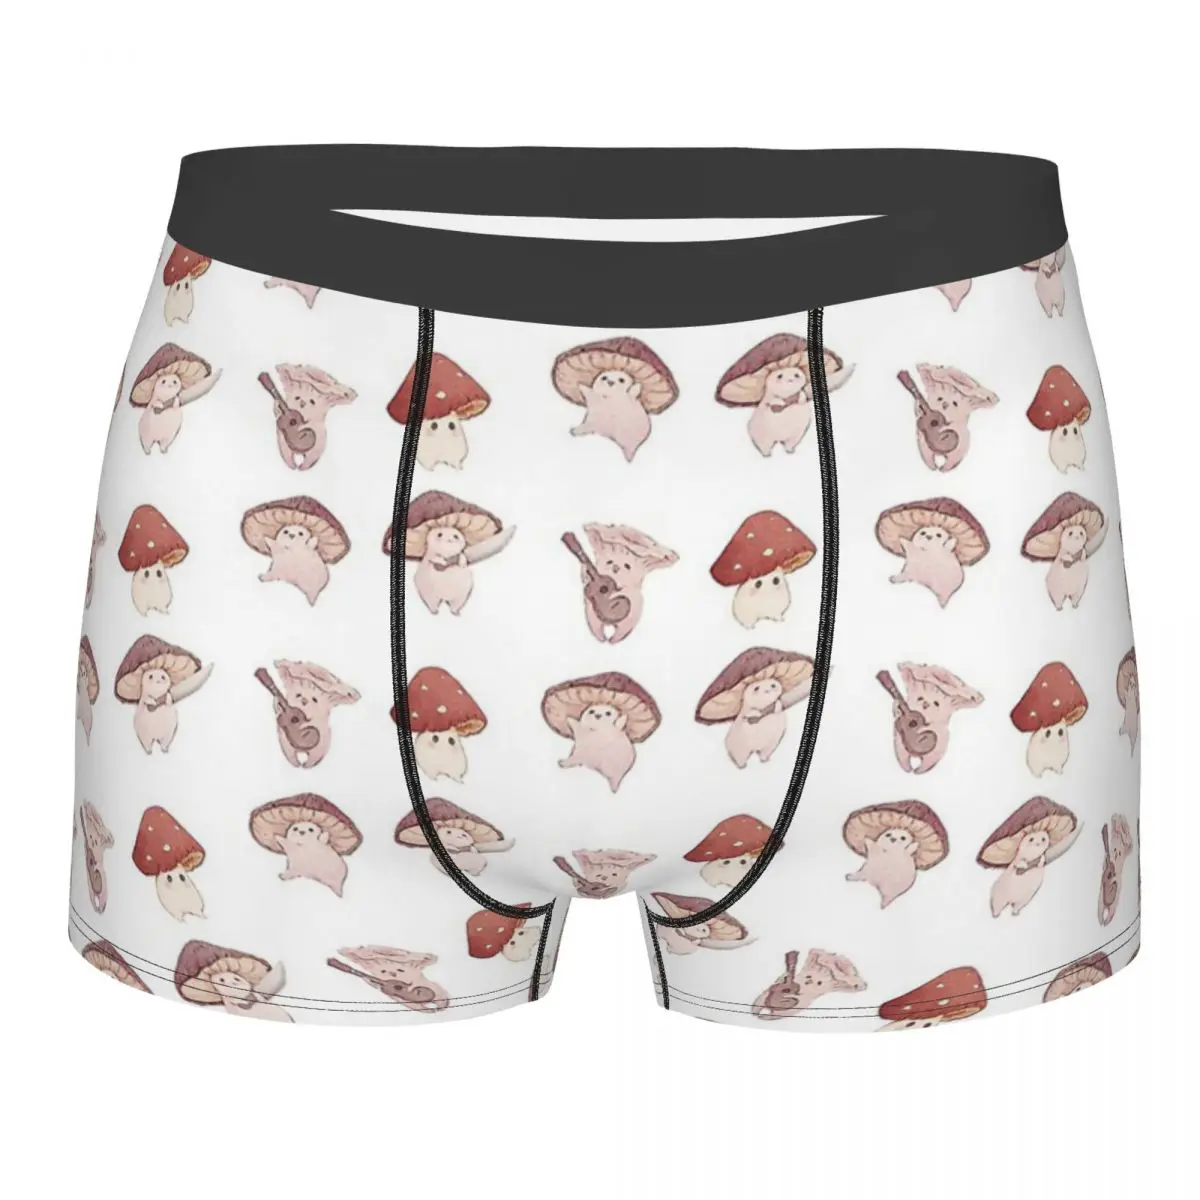 

Four Cute Friends Mushroom Mushrooms Forest Underpants Cotton Panties Male Underwear Print Shorts Boxer Briefs